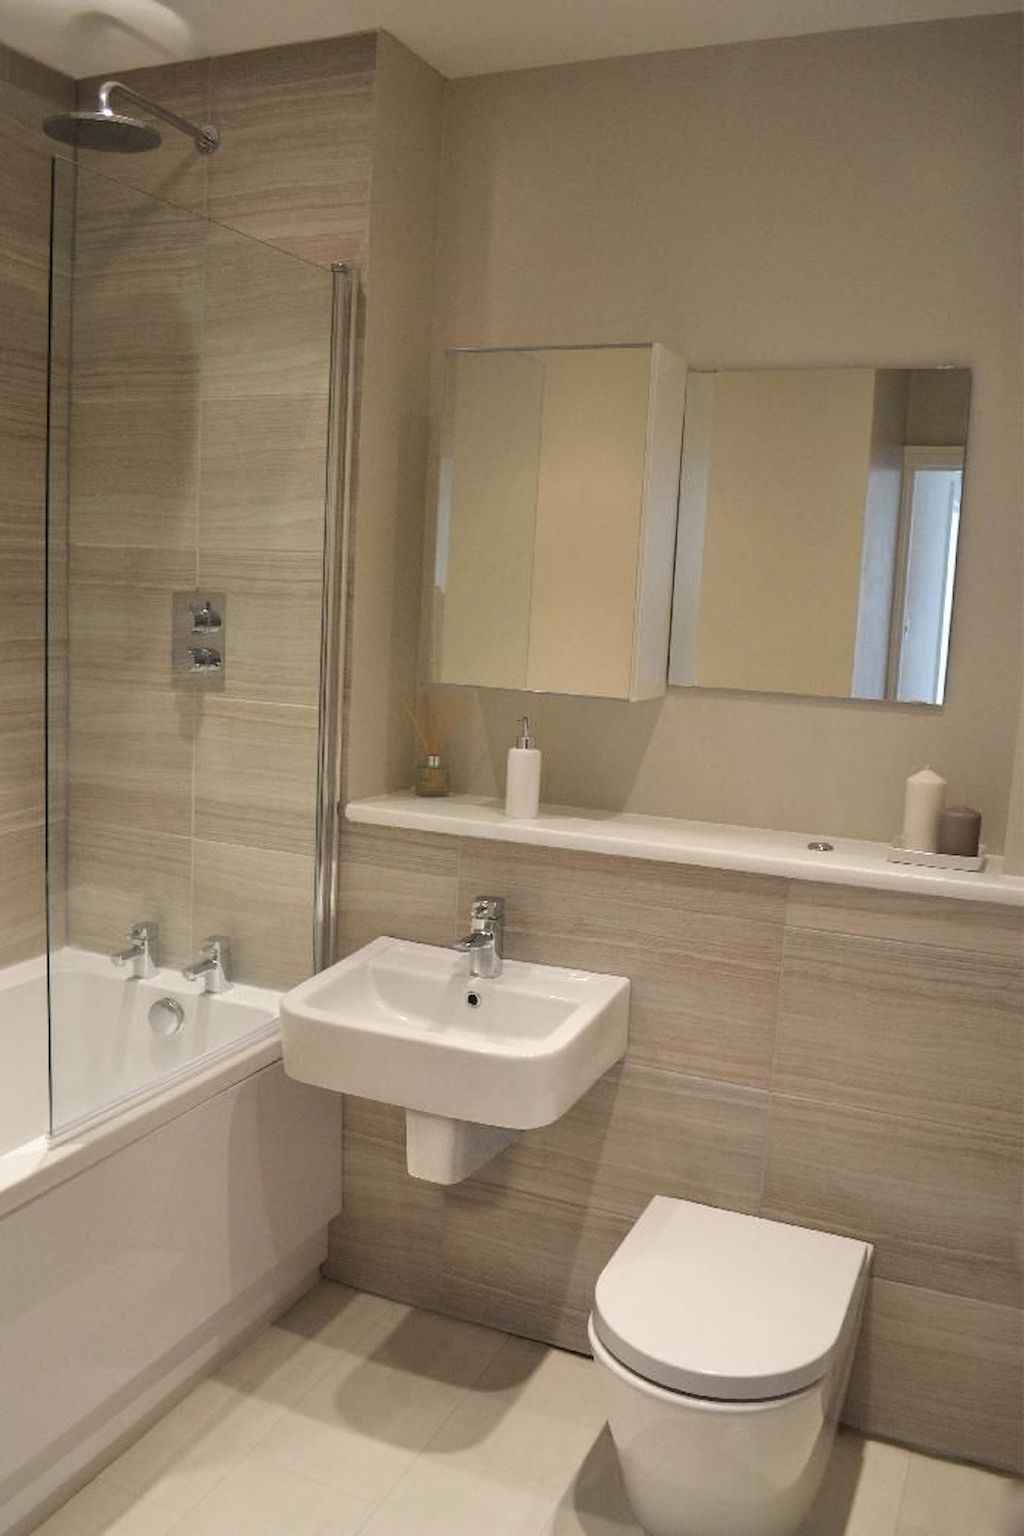 Best Bathroom Ideas. modern bathroom ideas, simple bathroom ideas, bathroom makeover, bathdroom decor.